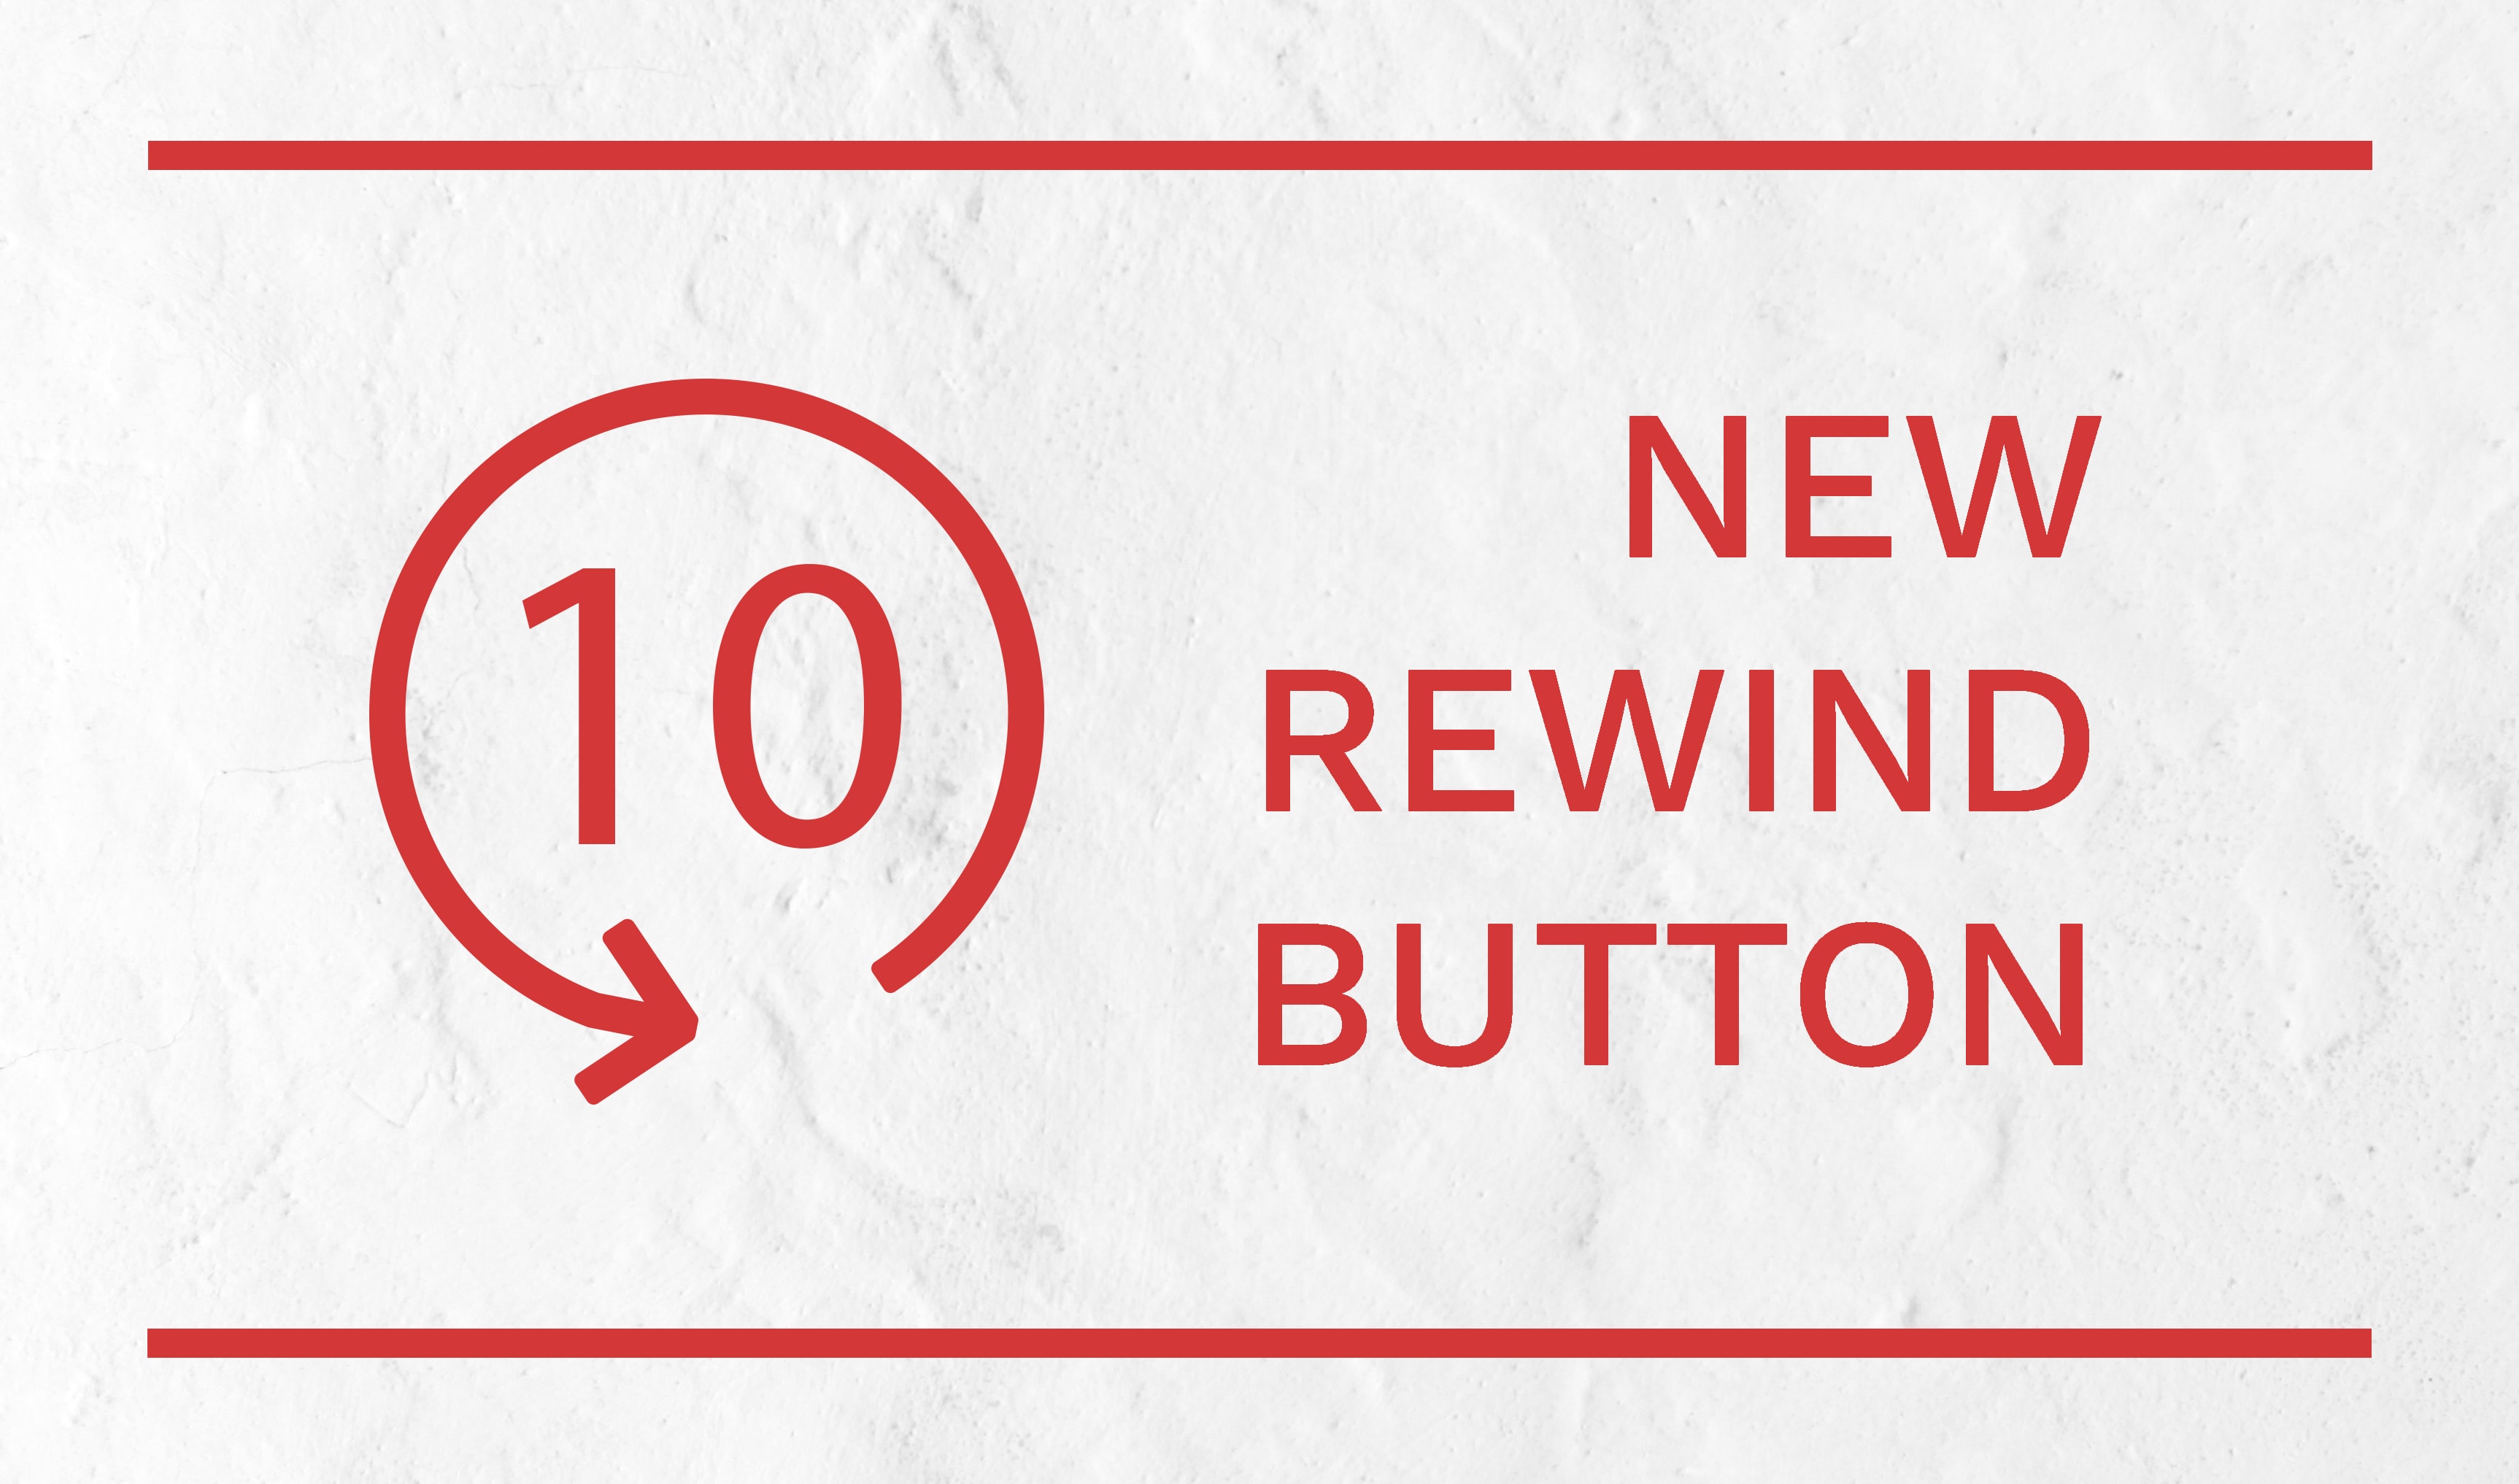 videos keep showing 10 second rewind button